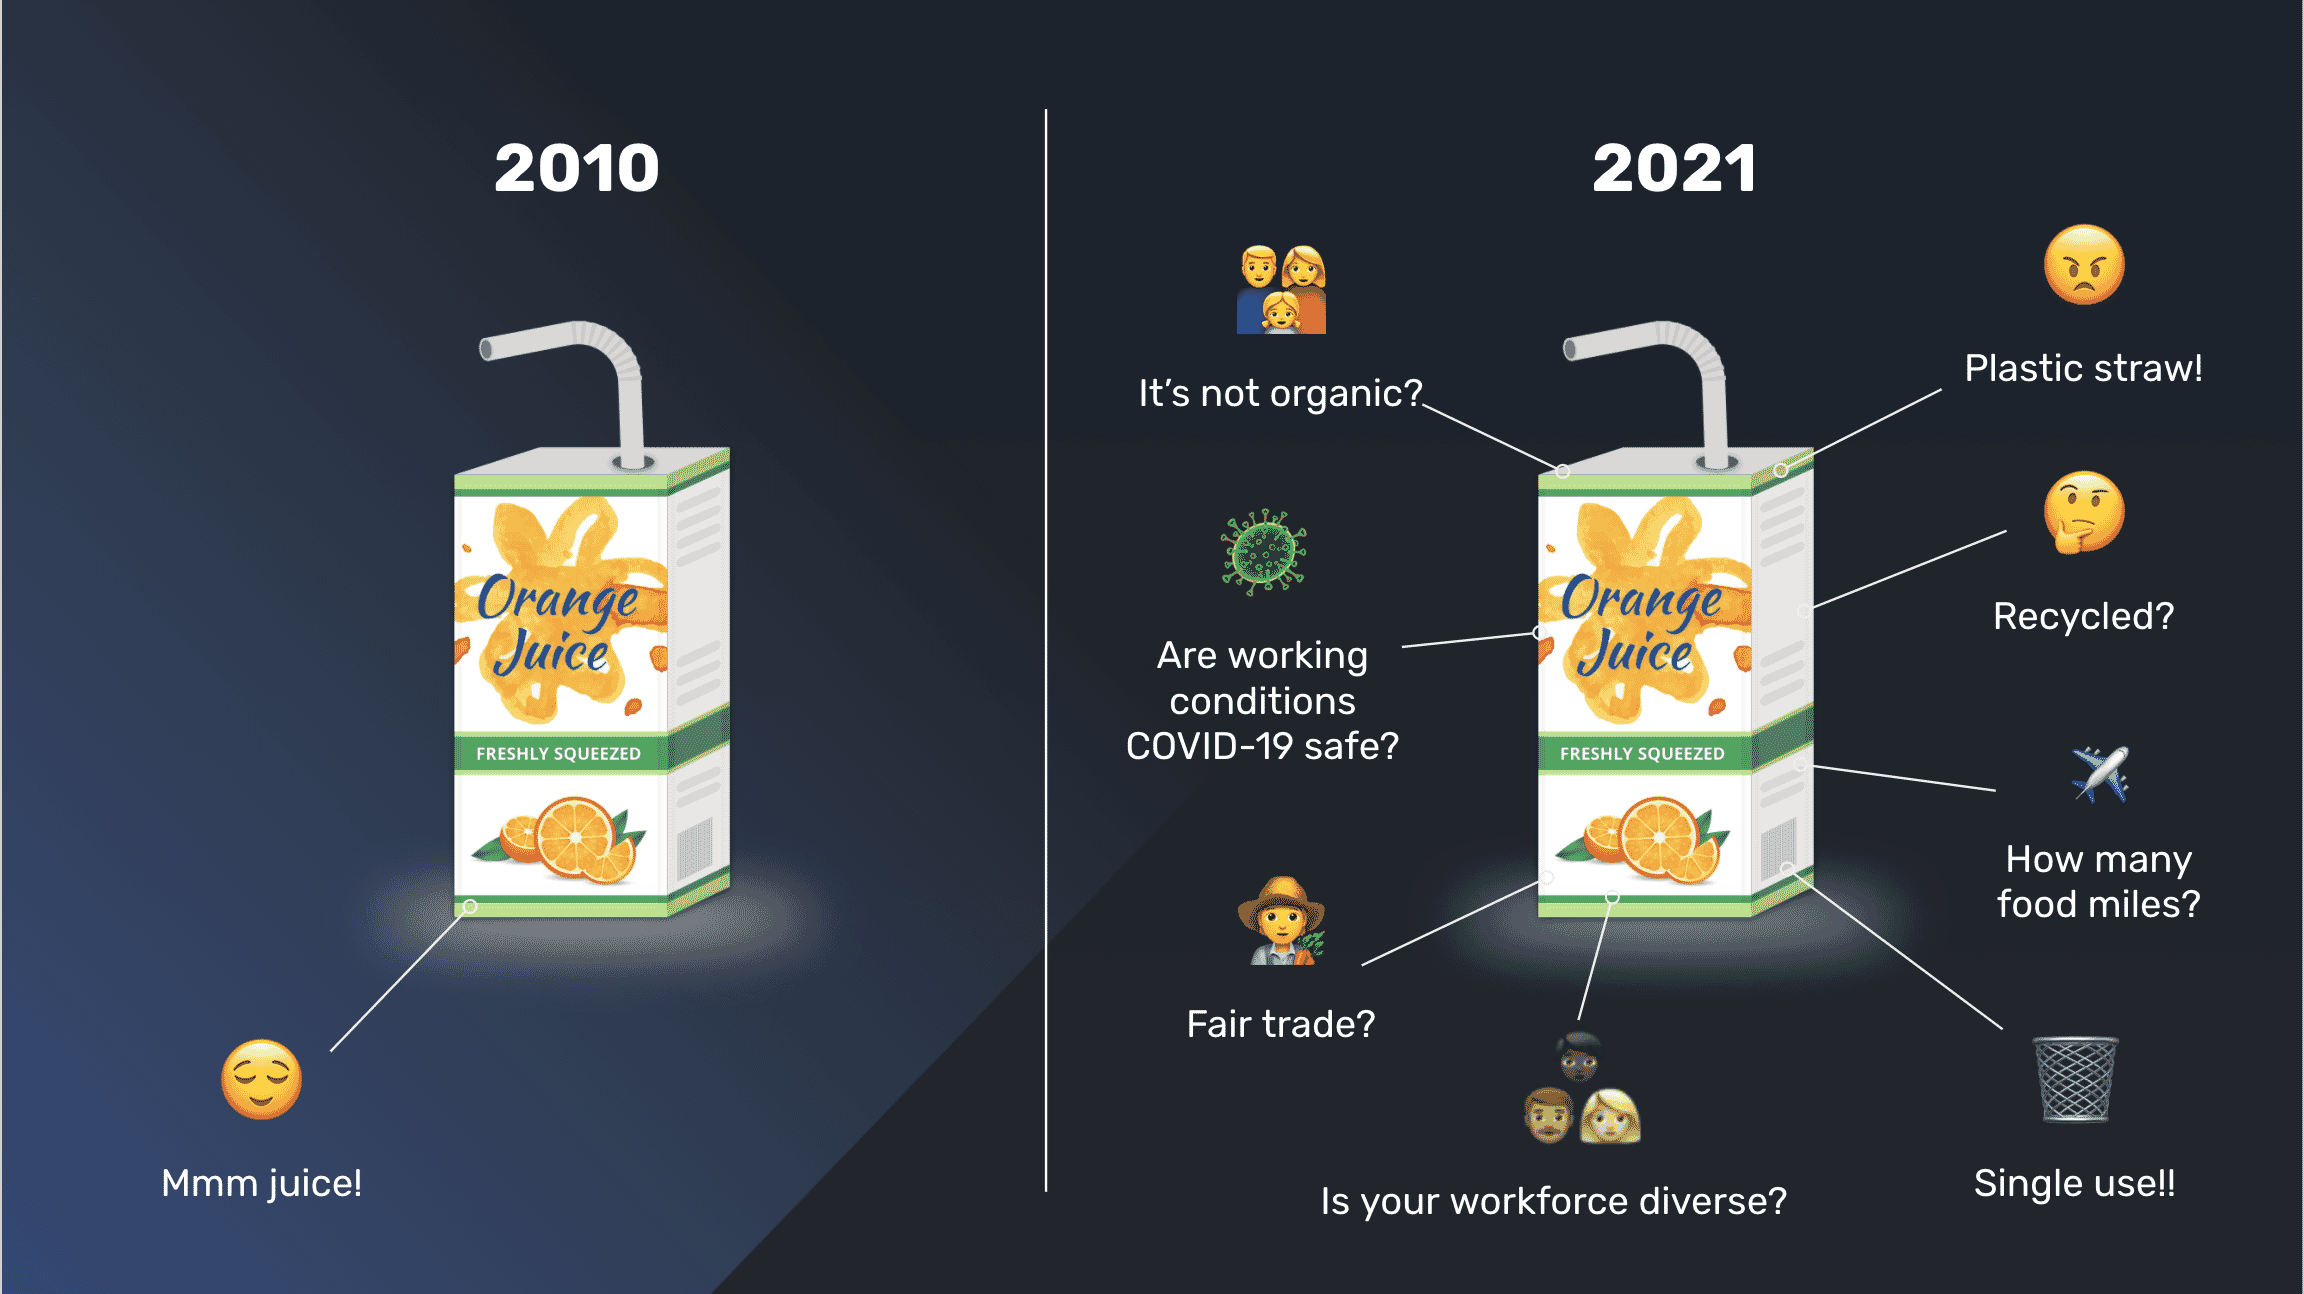 Image of concerns around Orange Juice in 2010 vs 2021